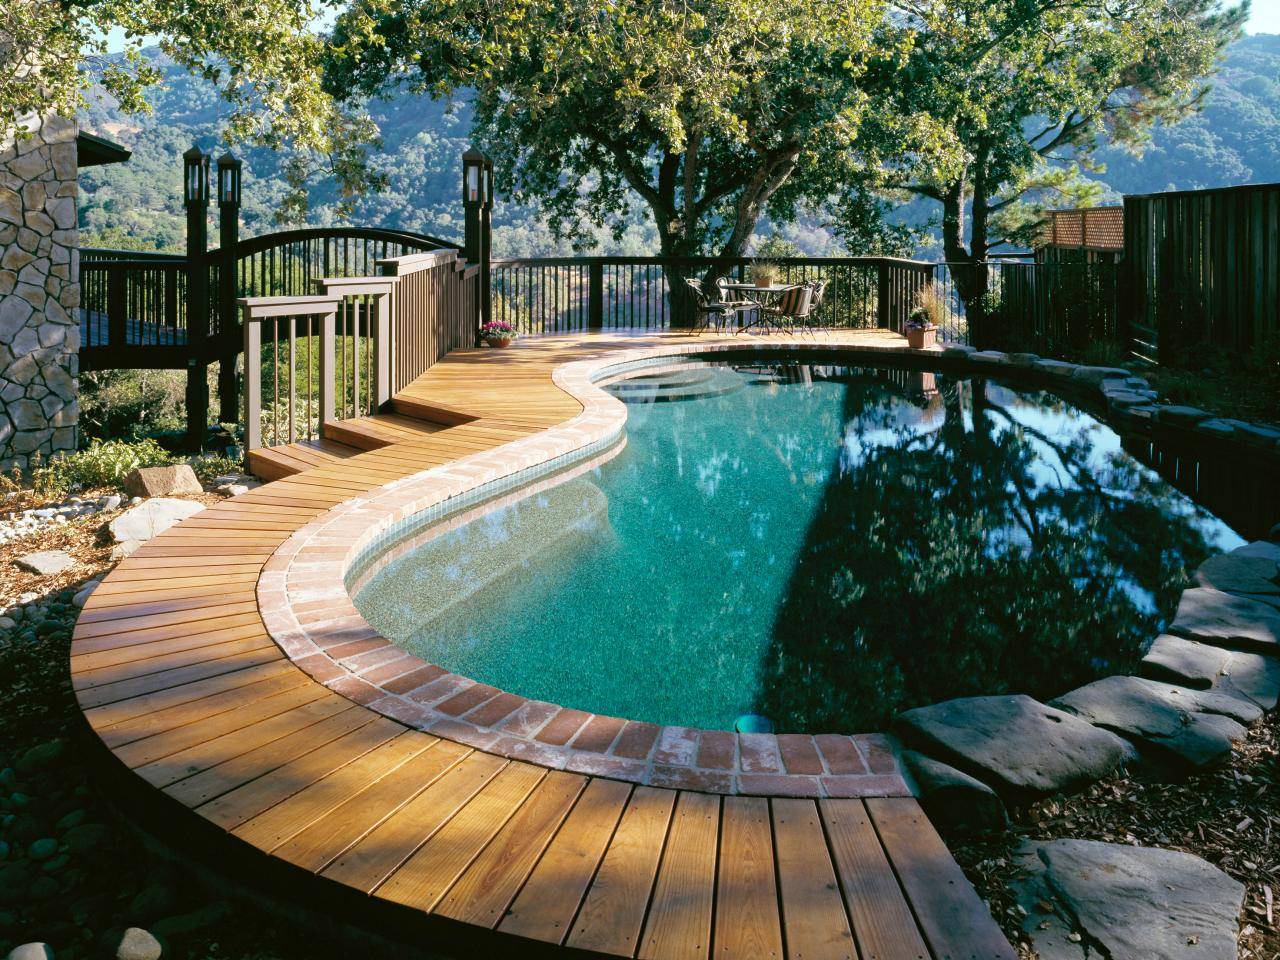 Make A Splash With These Stylish Wood Pool Deck Ideas | Decoist